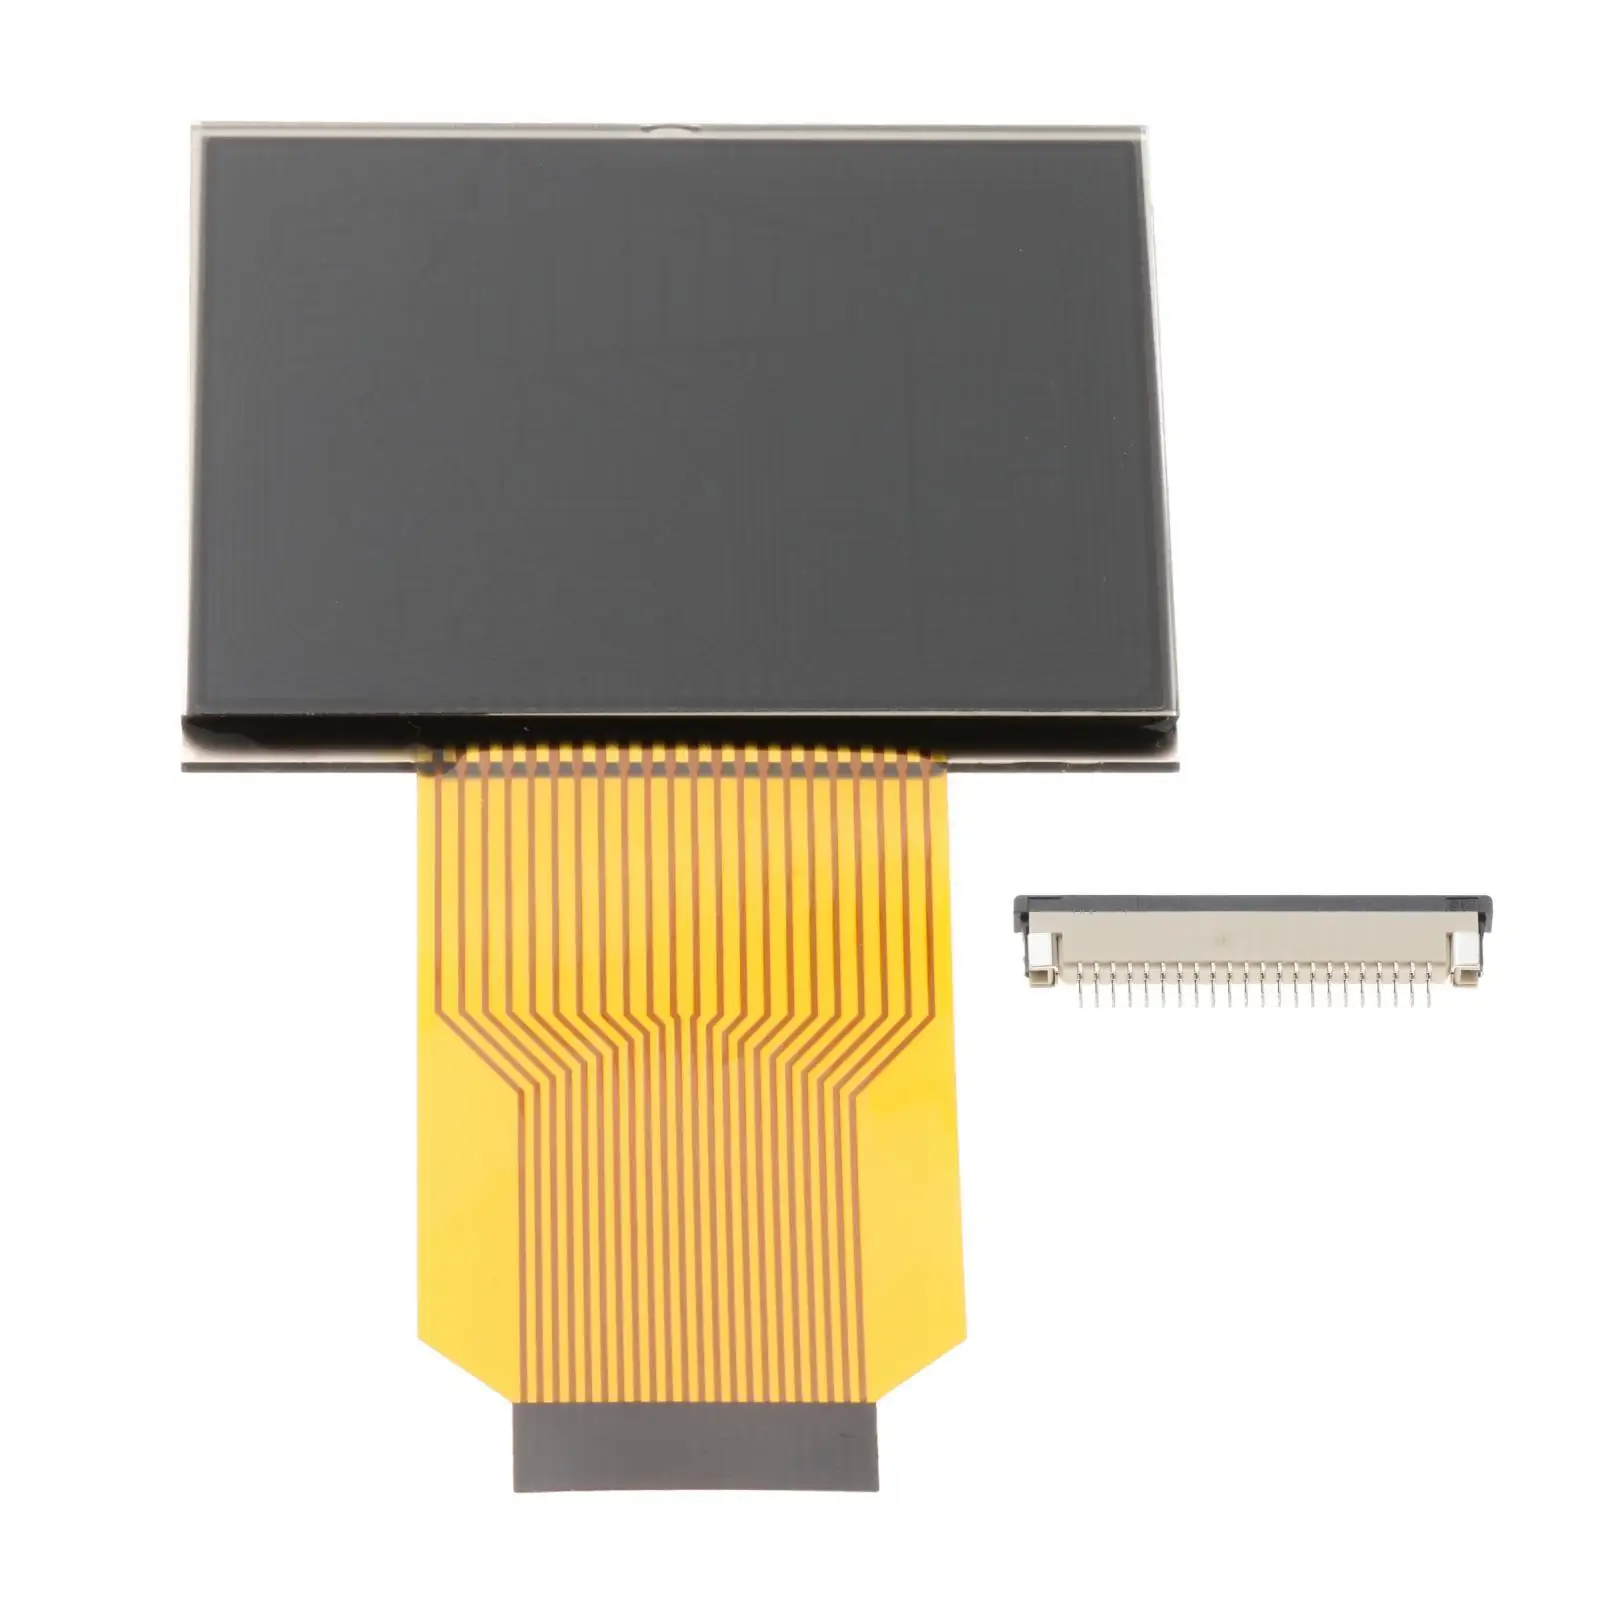 Pixel Repair LCD Screen High Performance Replace Fit for Saab 93 53-36-433.